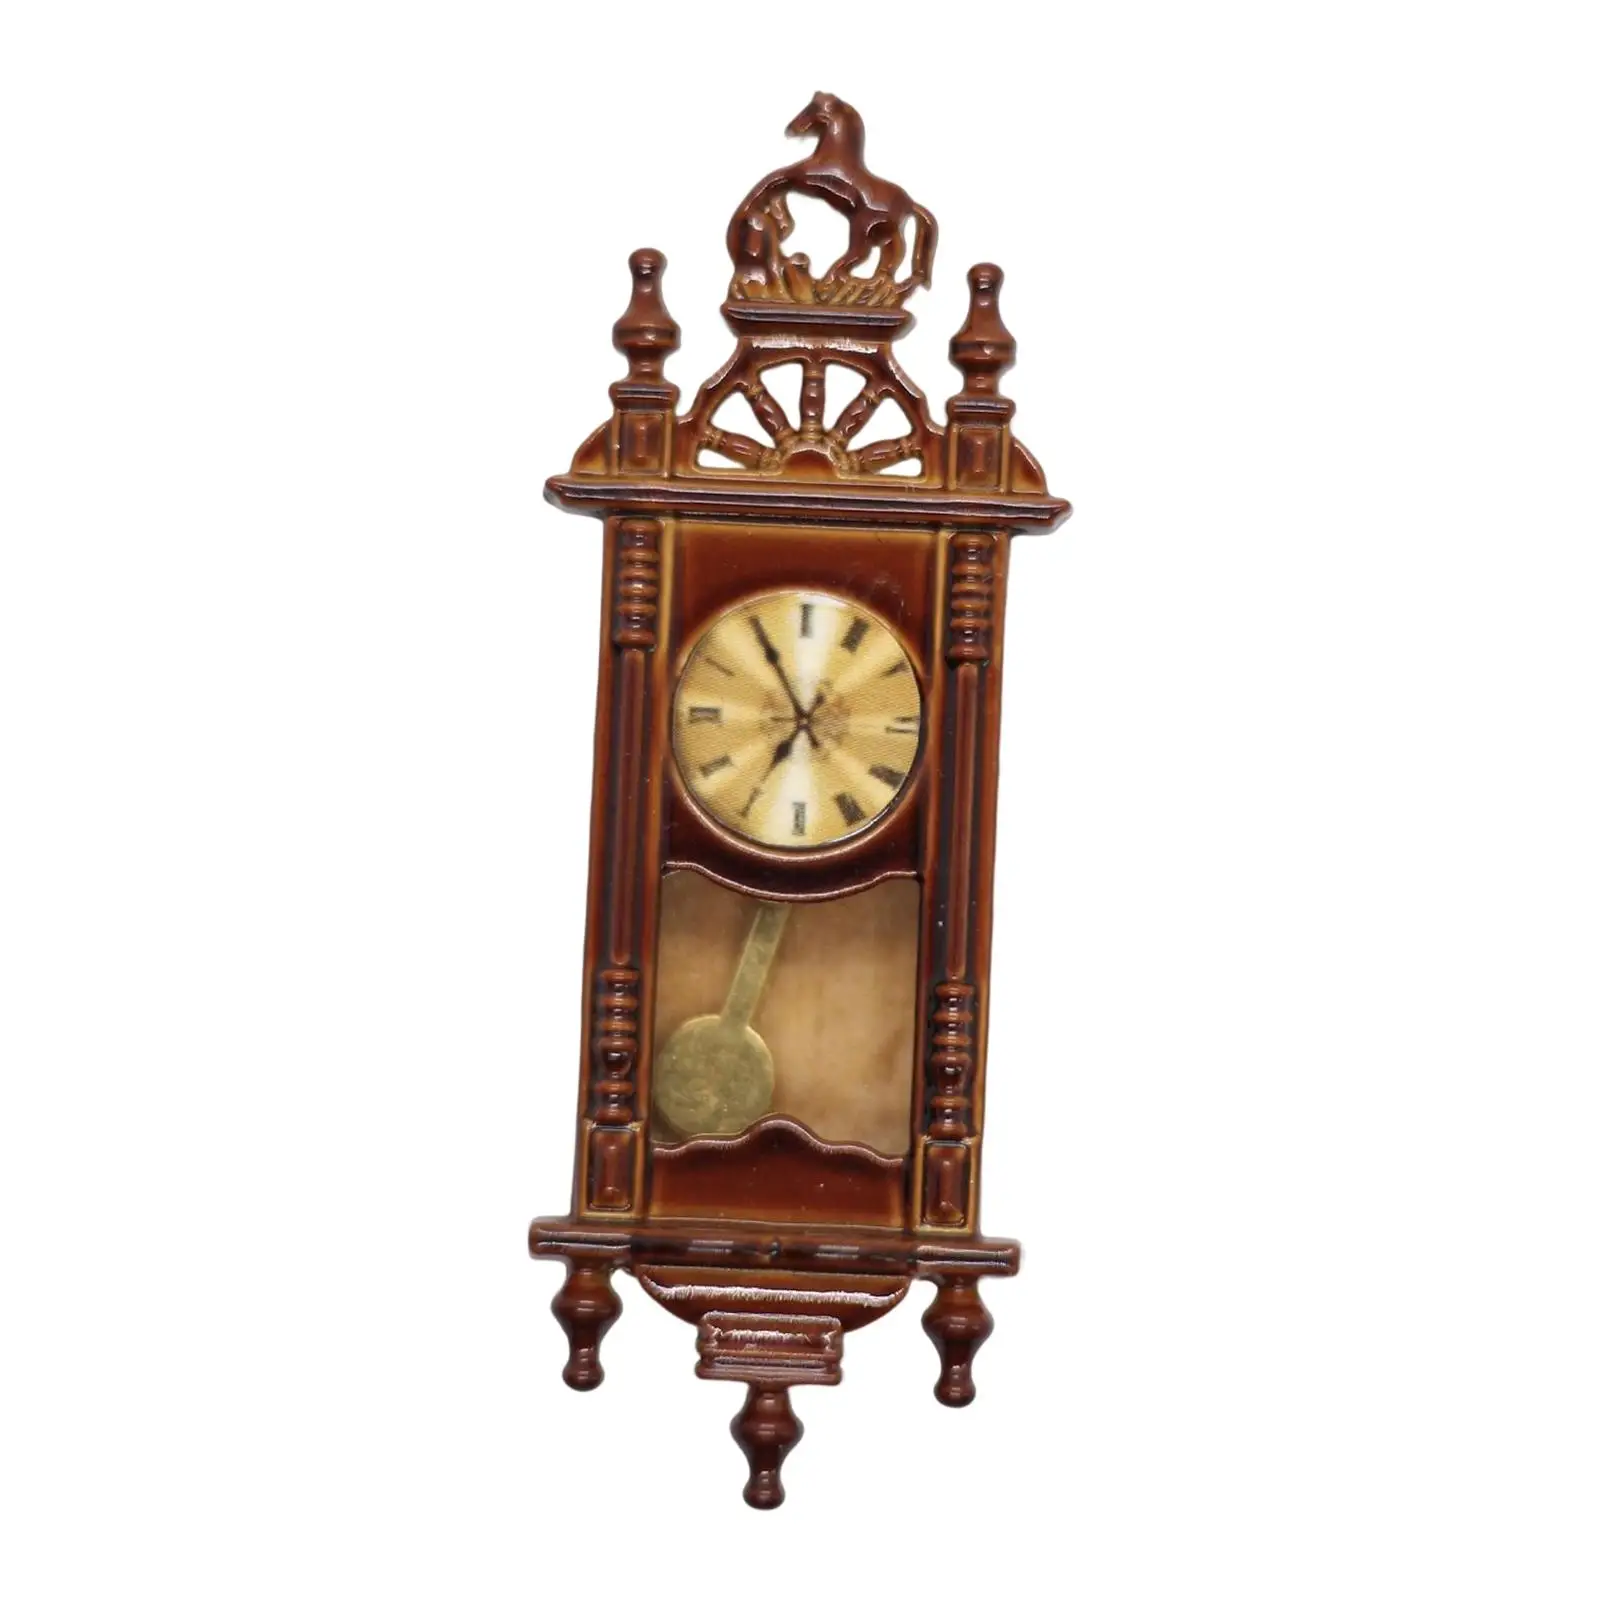 1/12 Dollhouse Wall Clock Wooden Frame Clock Antique Clock Model Delicate Accessories Decor Furniture Model Pretend Play